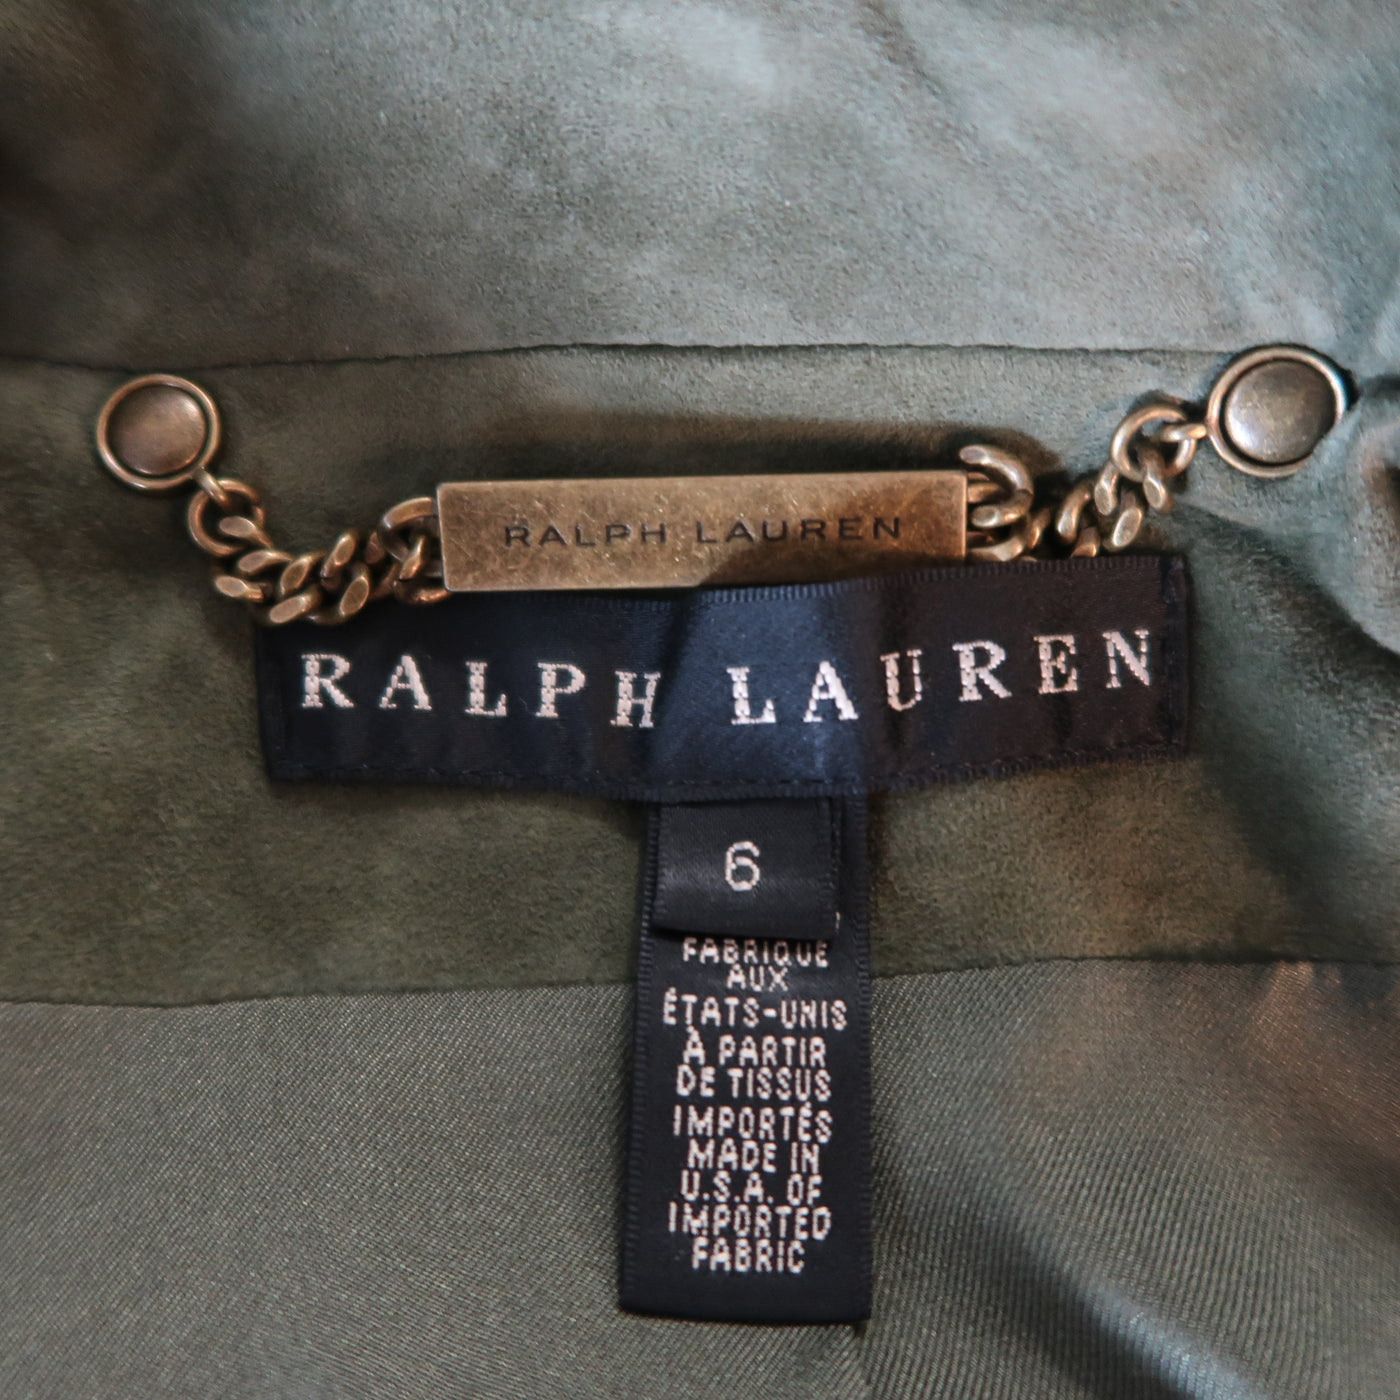 RALPH LAUREN Size 6 Olive Suede Cropped Lace Up Biker Jacket